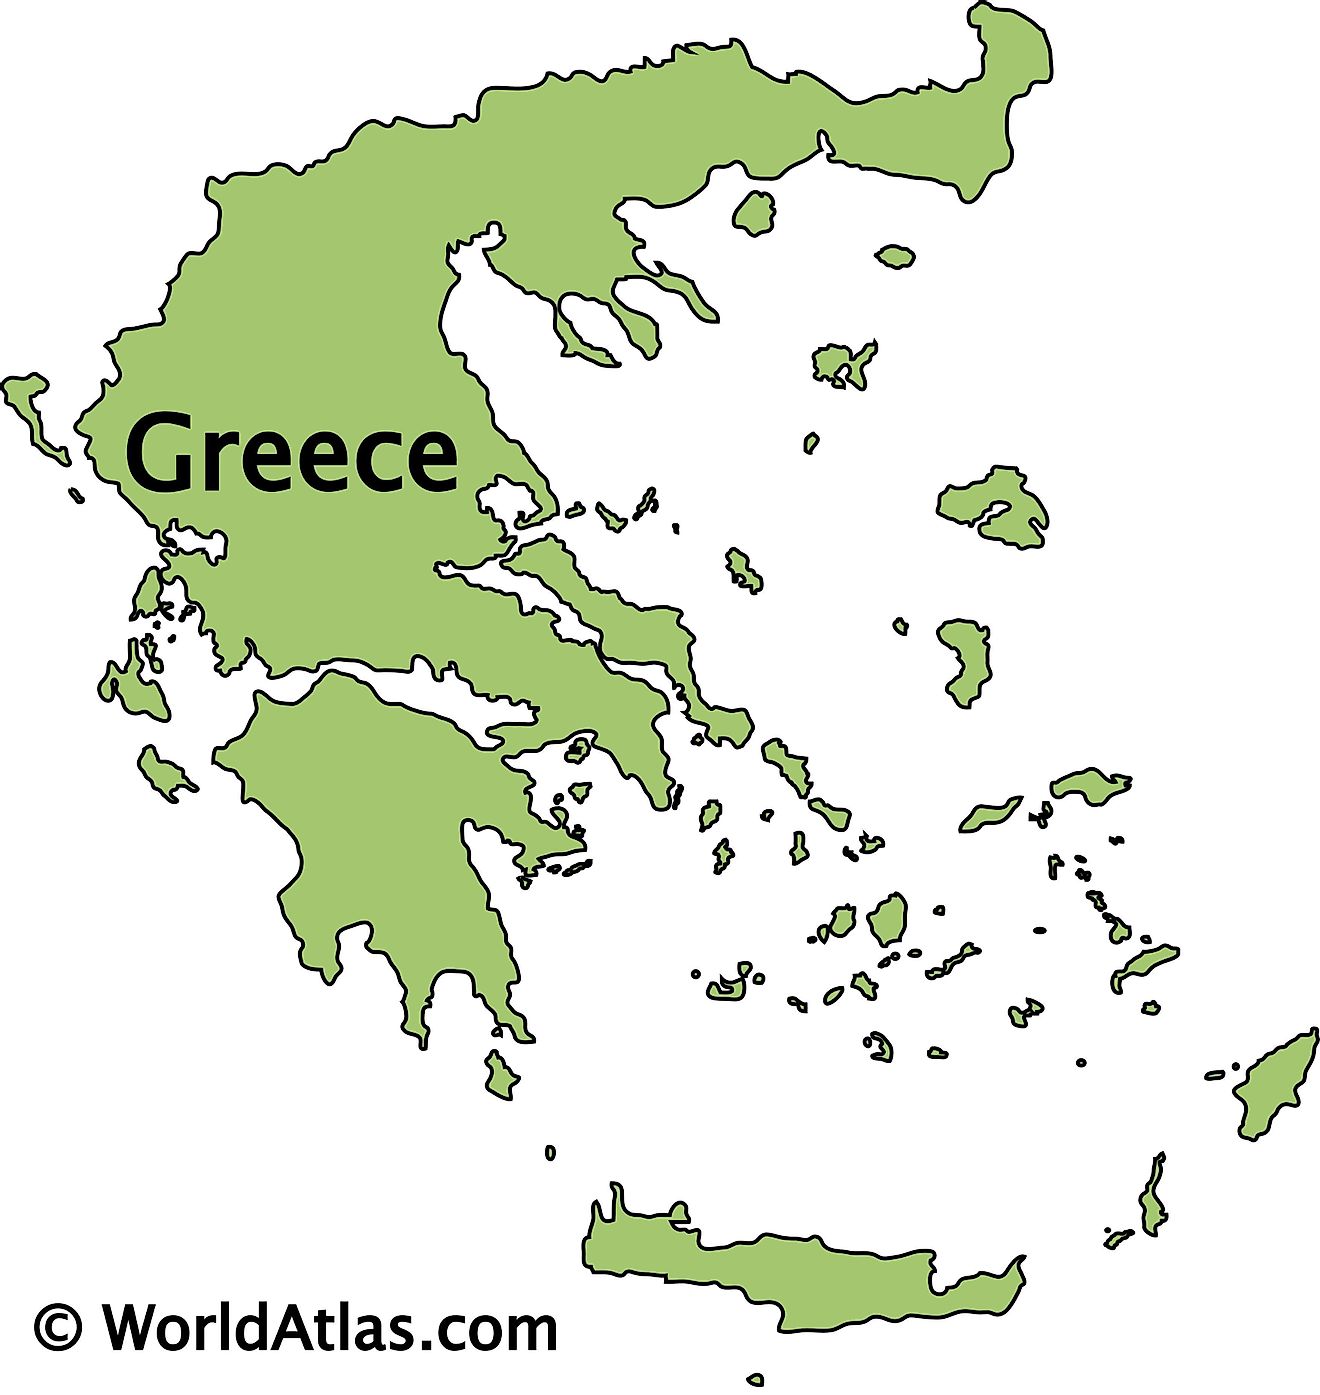 greece-maps-facts-world-atlas